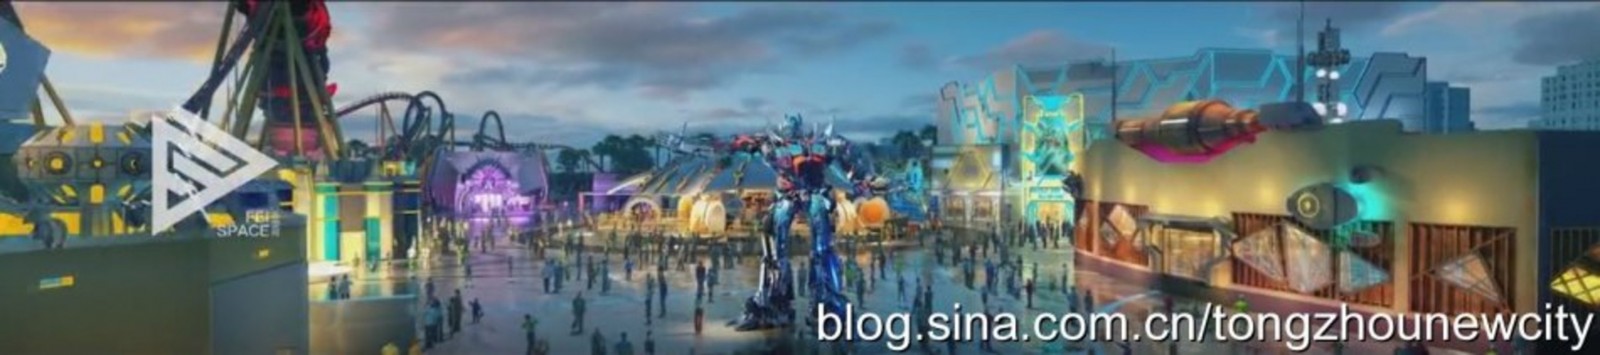 Transformers News: Universal Studios Beijing Concept Art For Transformers Land